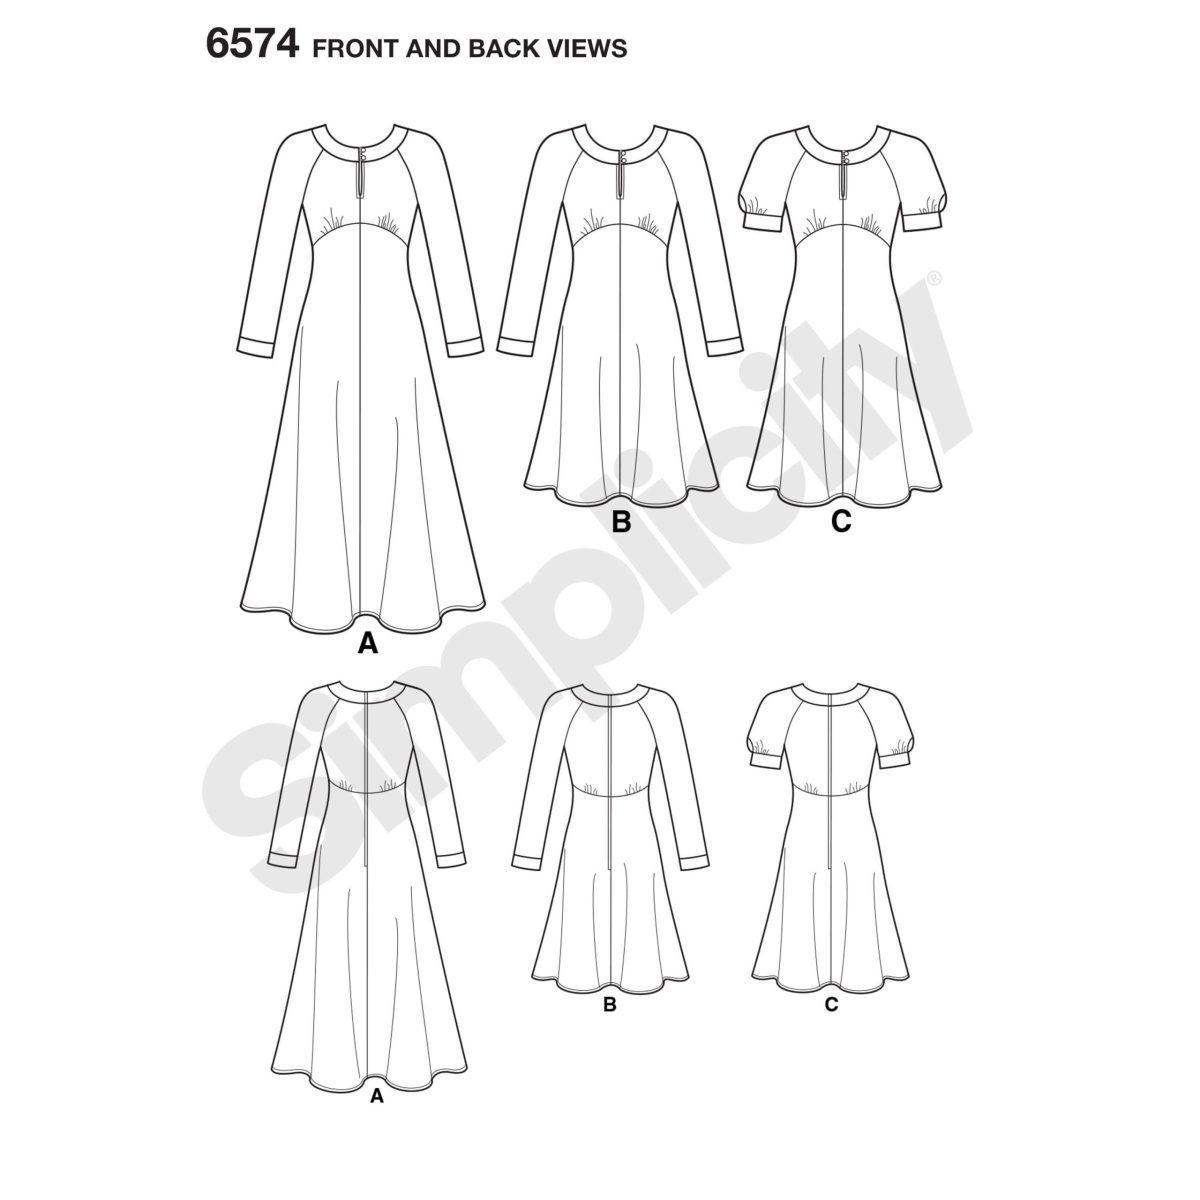 New Look Pattern 6574 Misses' Dresses